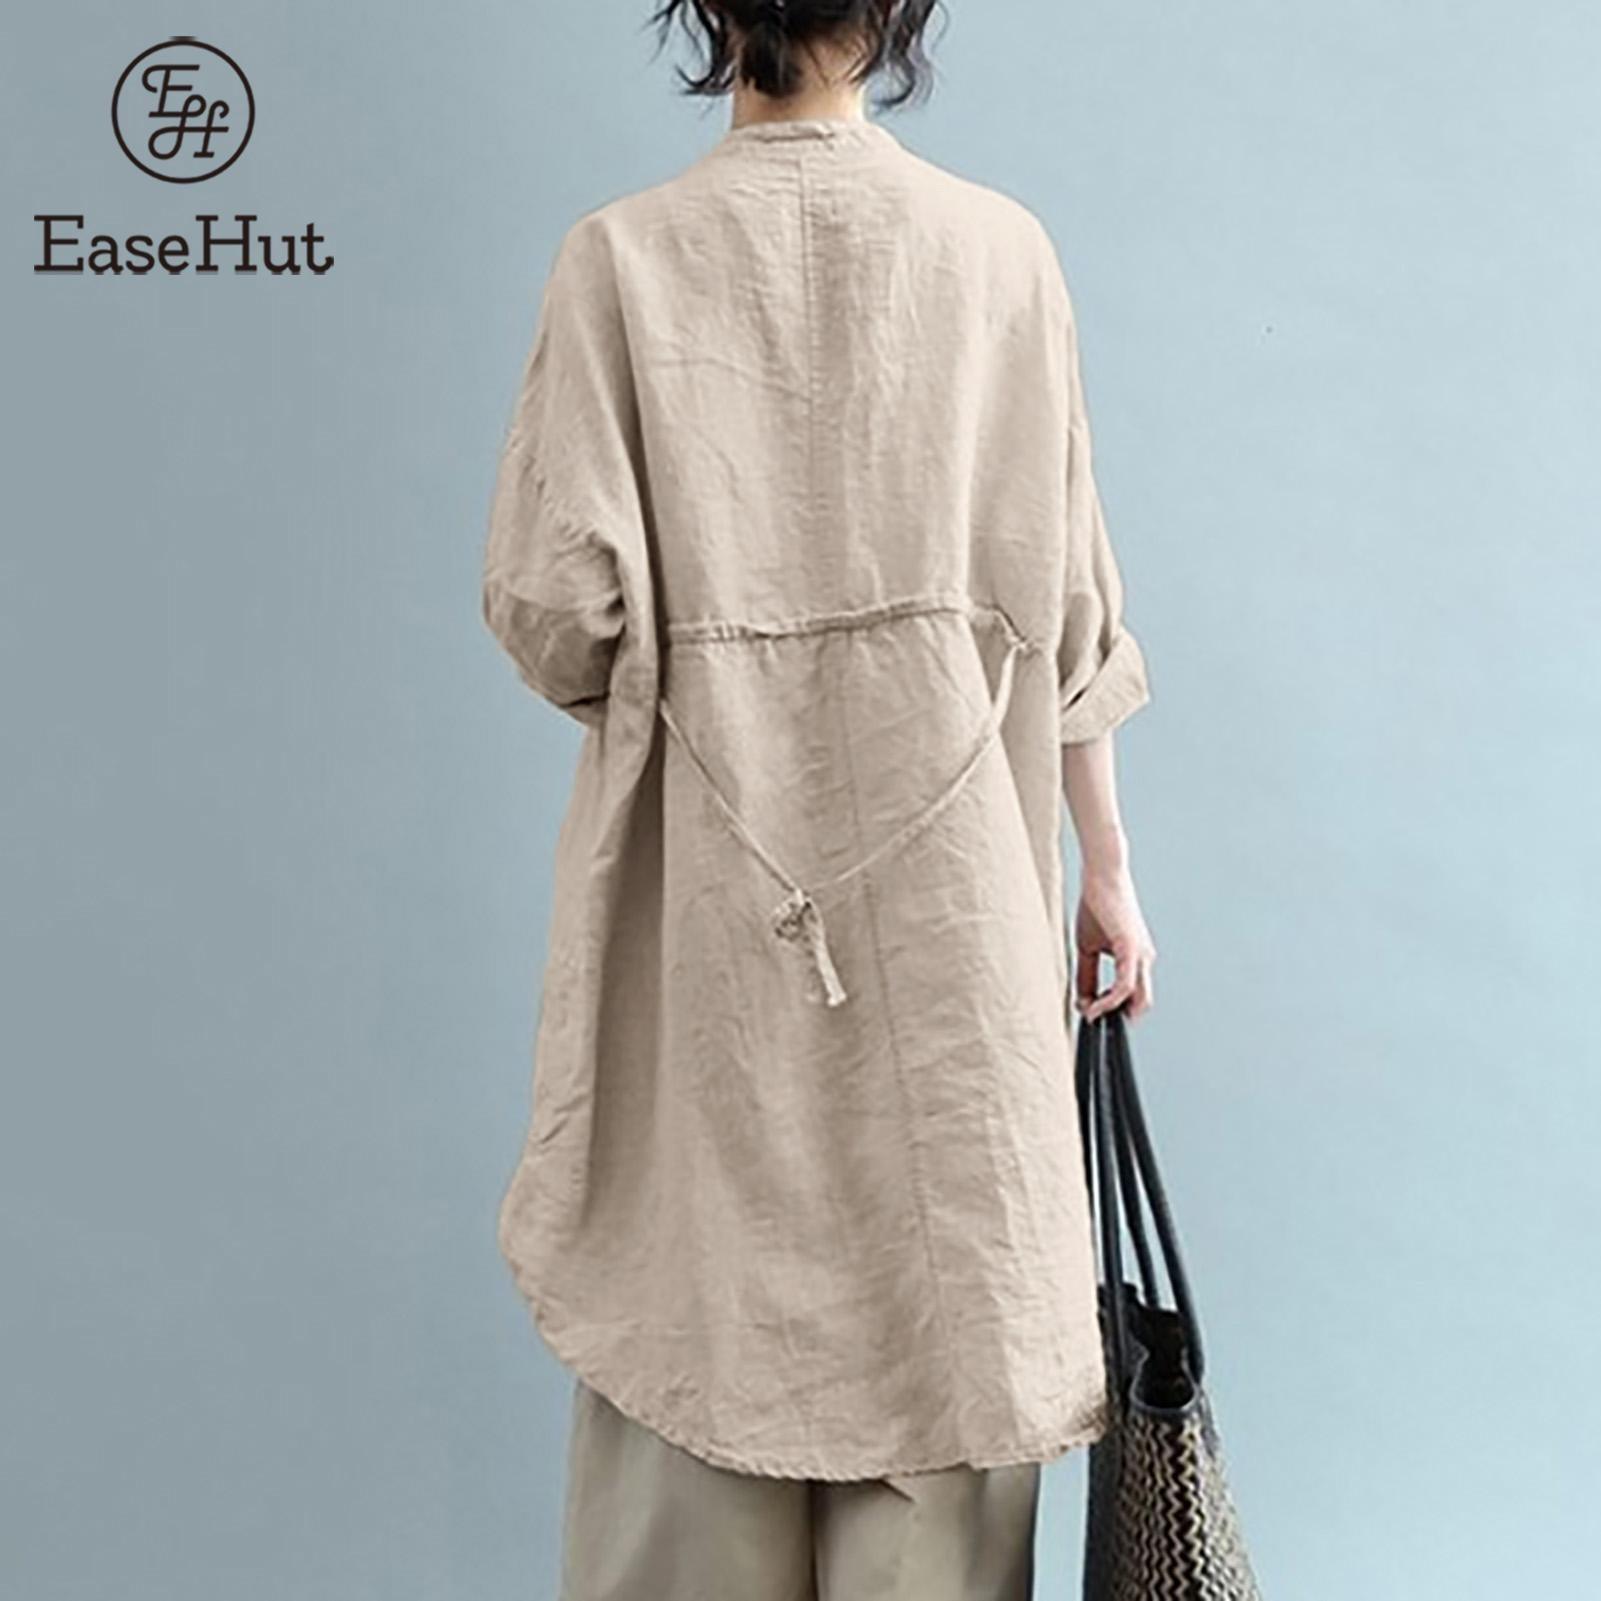 EaseHut Women Cotton Linen Blouse Vintage Stand Collar Pocket Long Sleeve Tunic Tops Plus Size Loose Casual - Beige Street